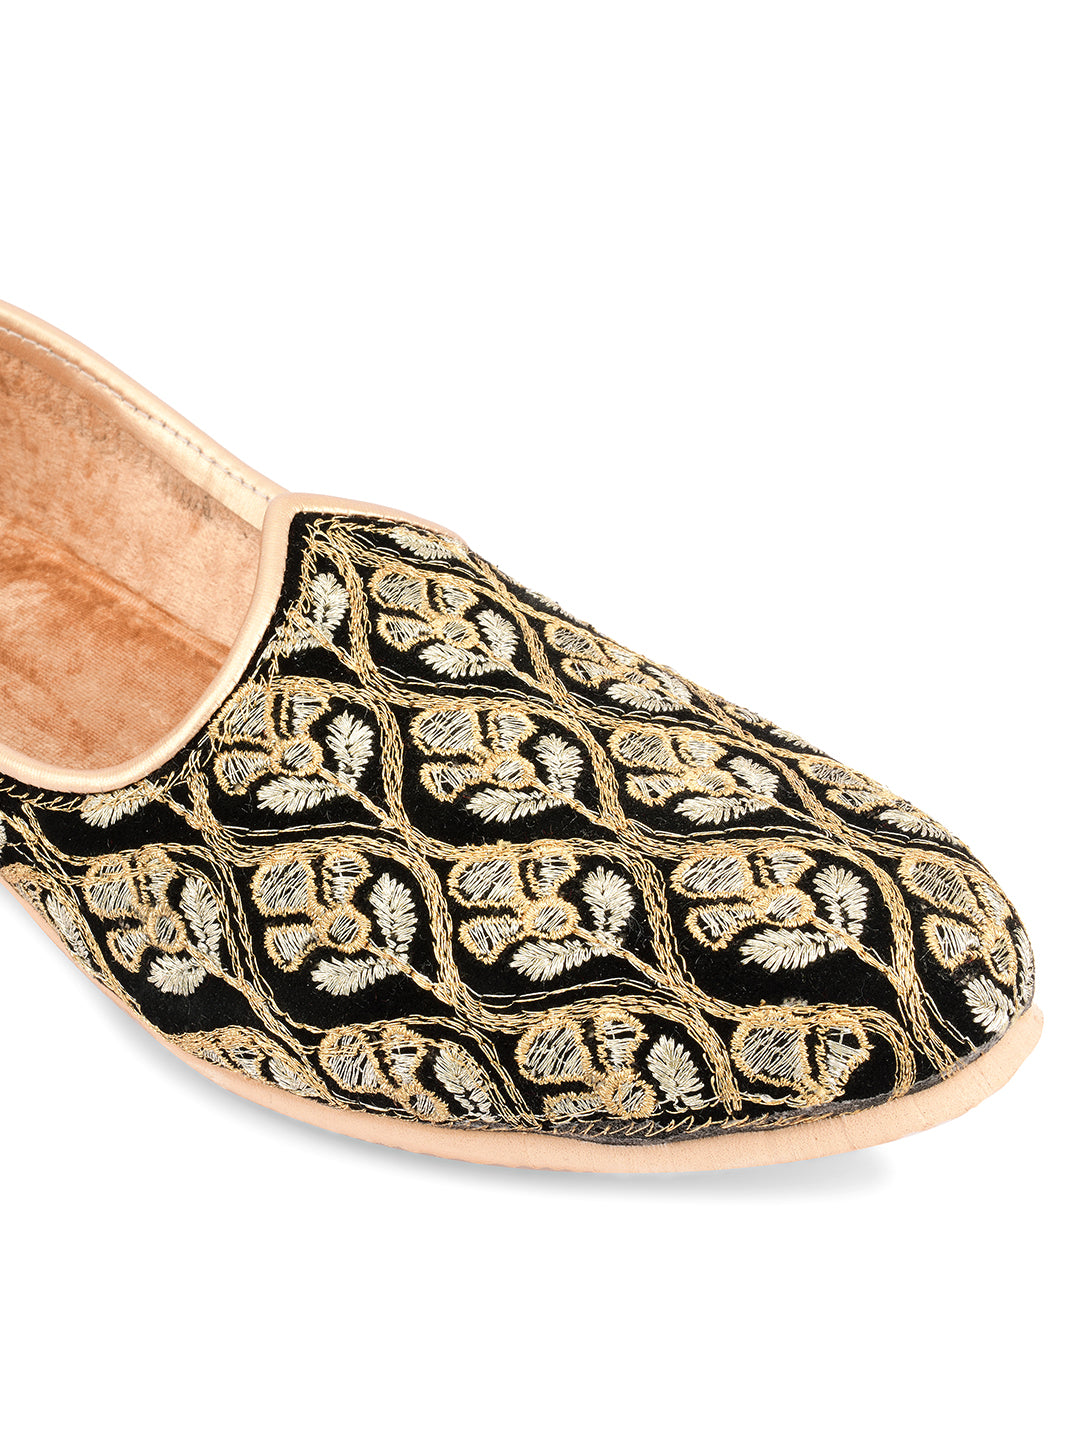 DESI COLOUR Mens Gold Ethnic Footwear/Punjabi Jutti